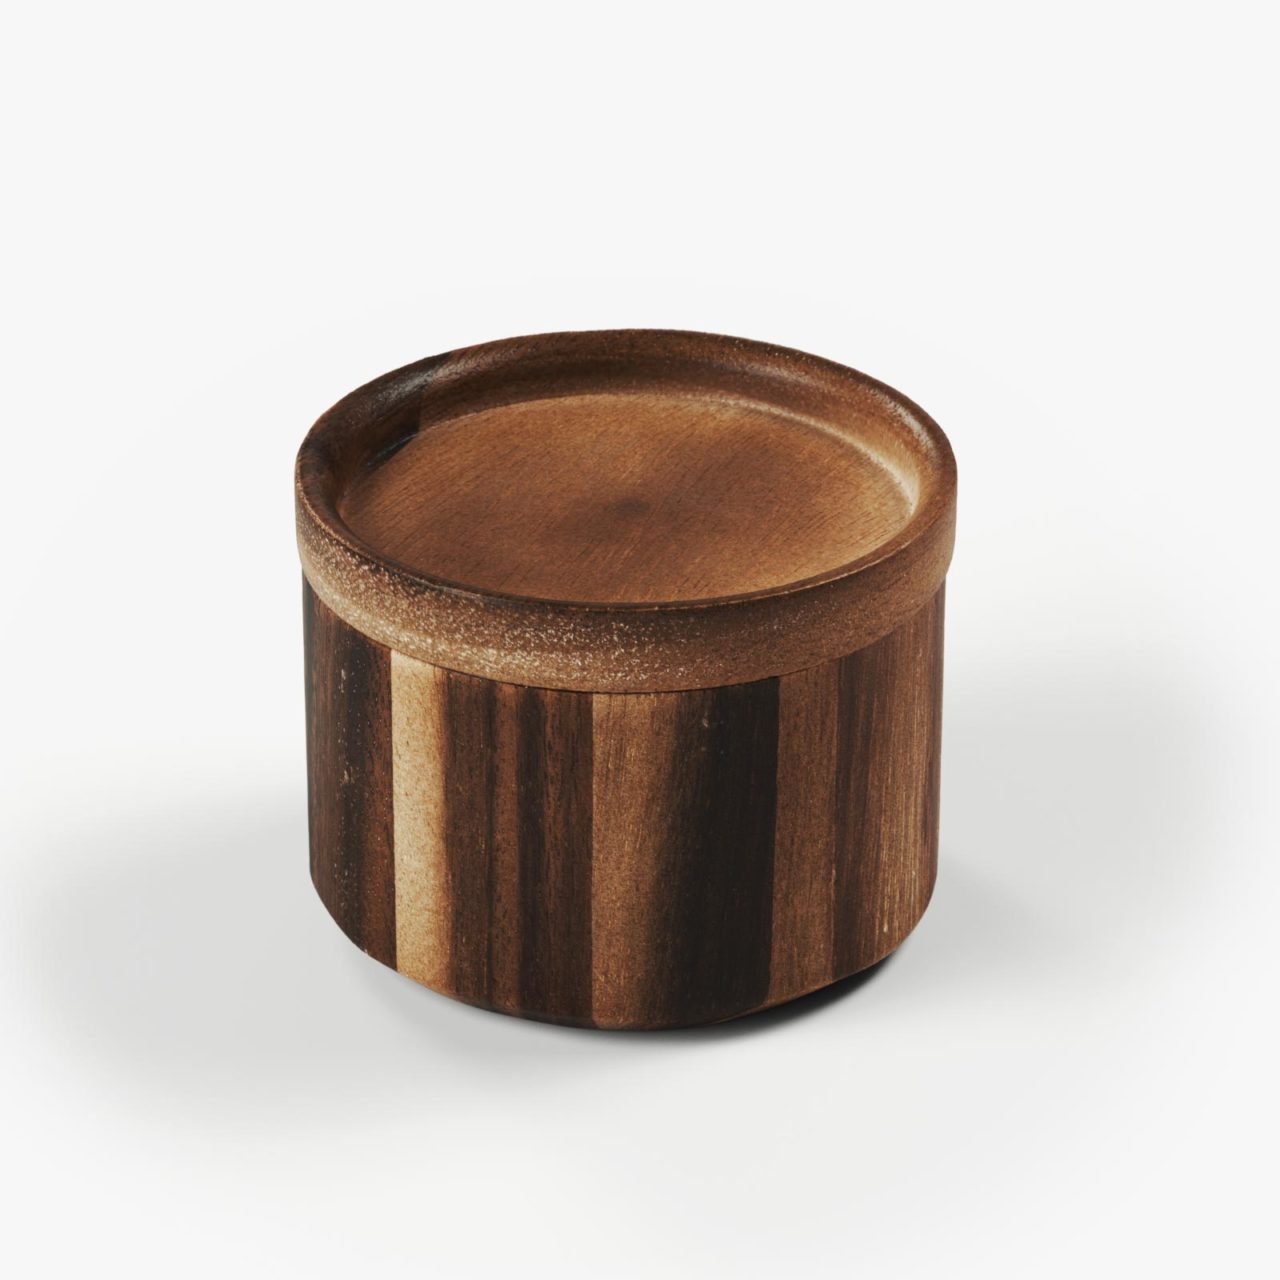 polypasta - dille kamille - wooden bowl round 01